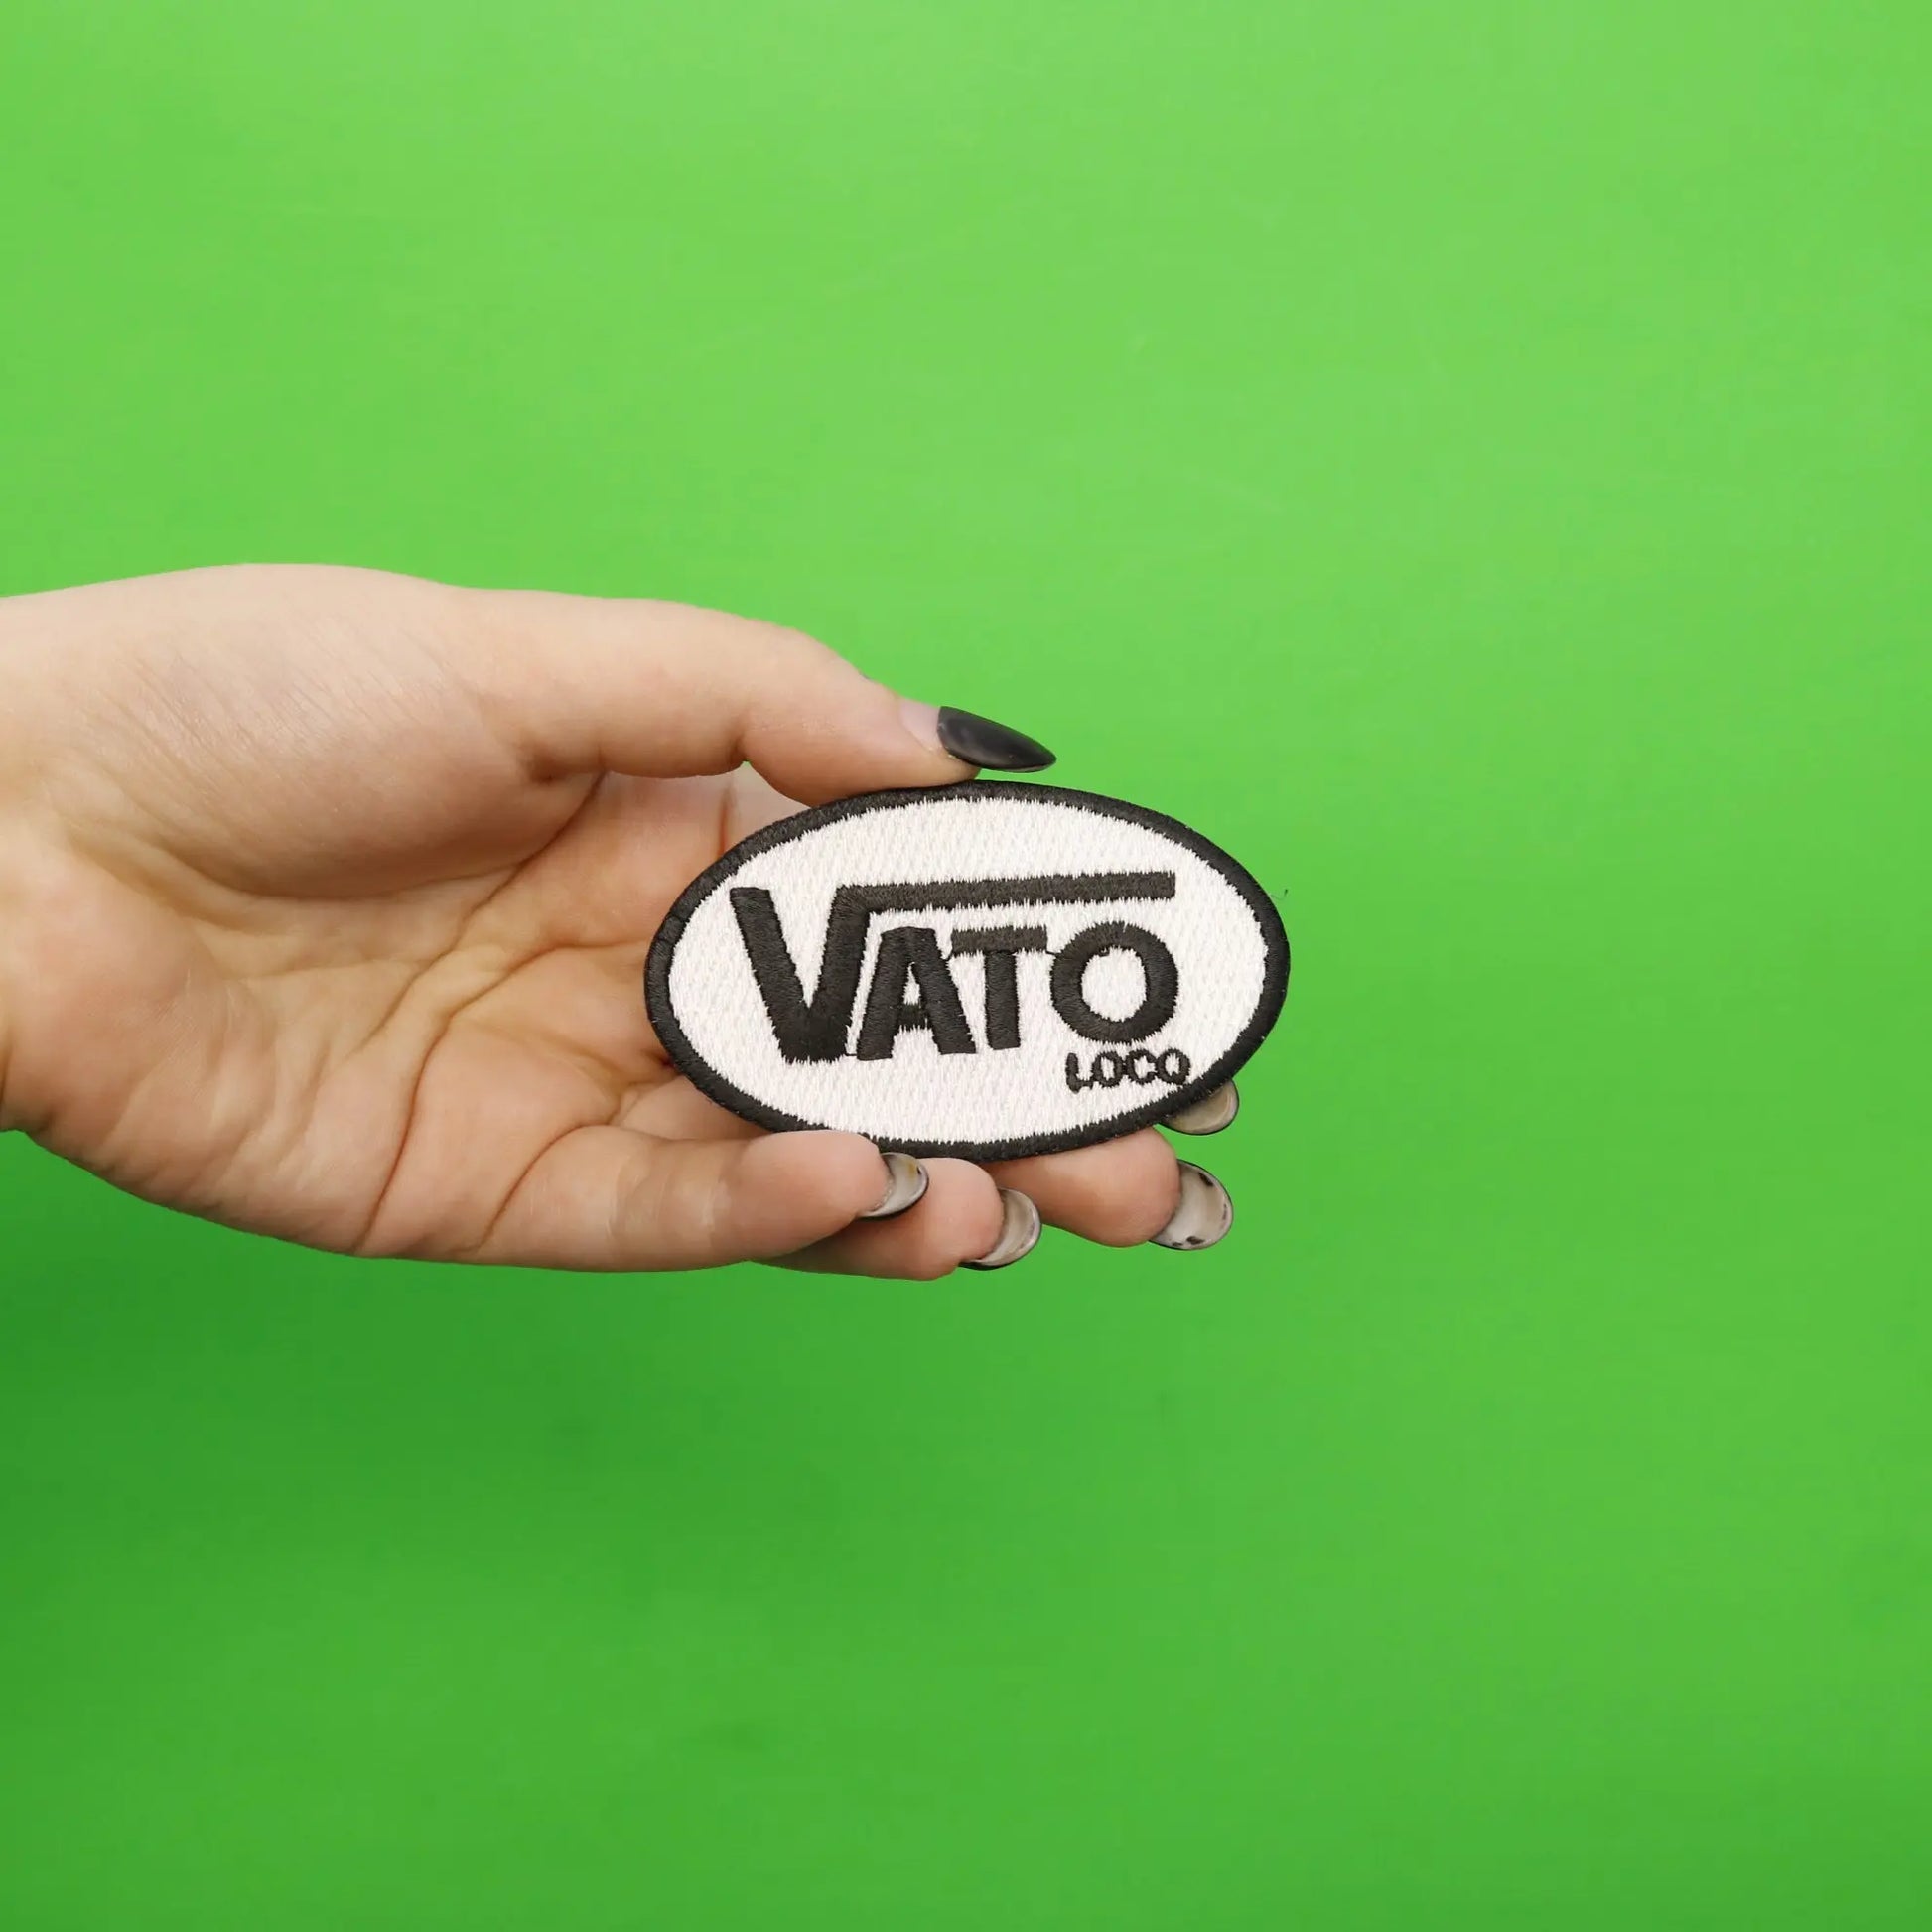 Vato Loco Brand Parody Embroidered Iron On Patch 